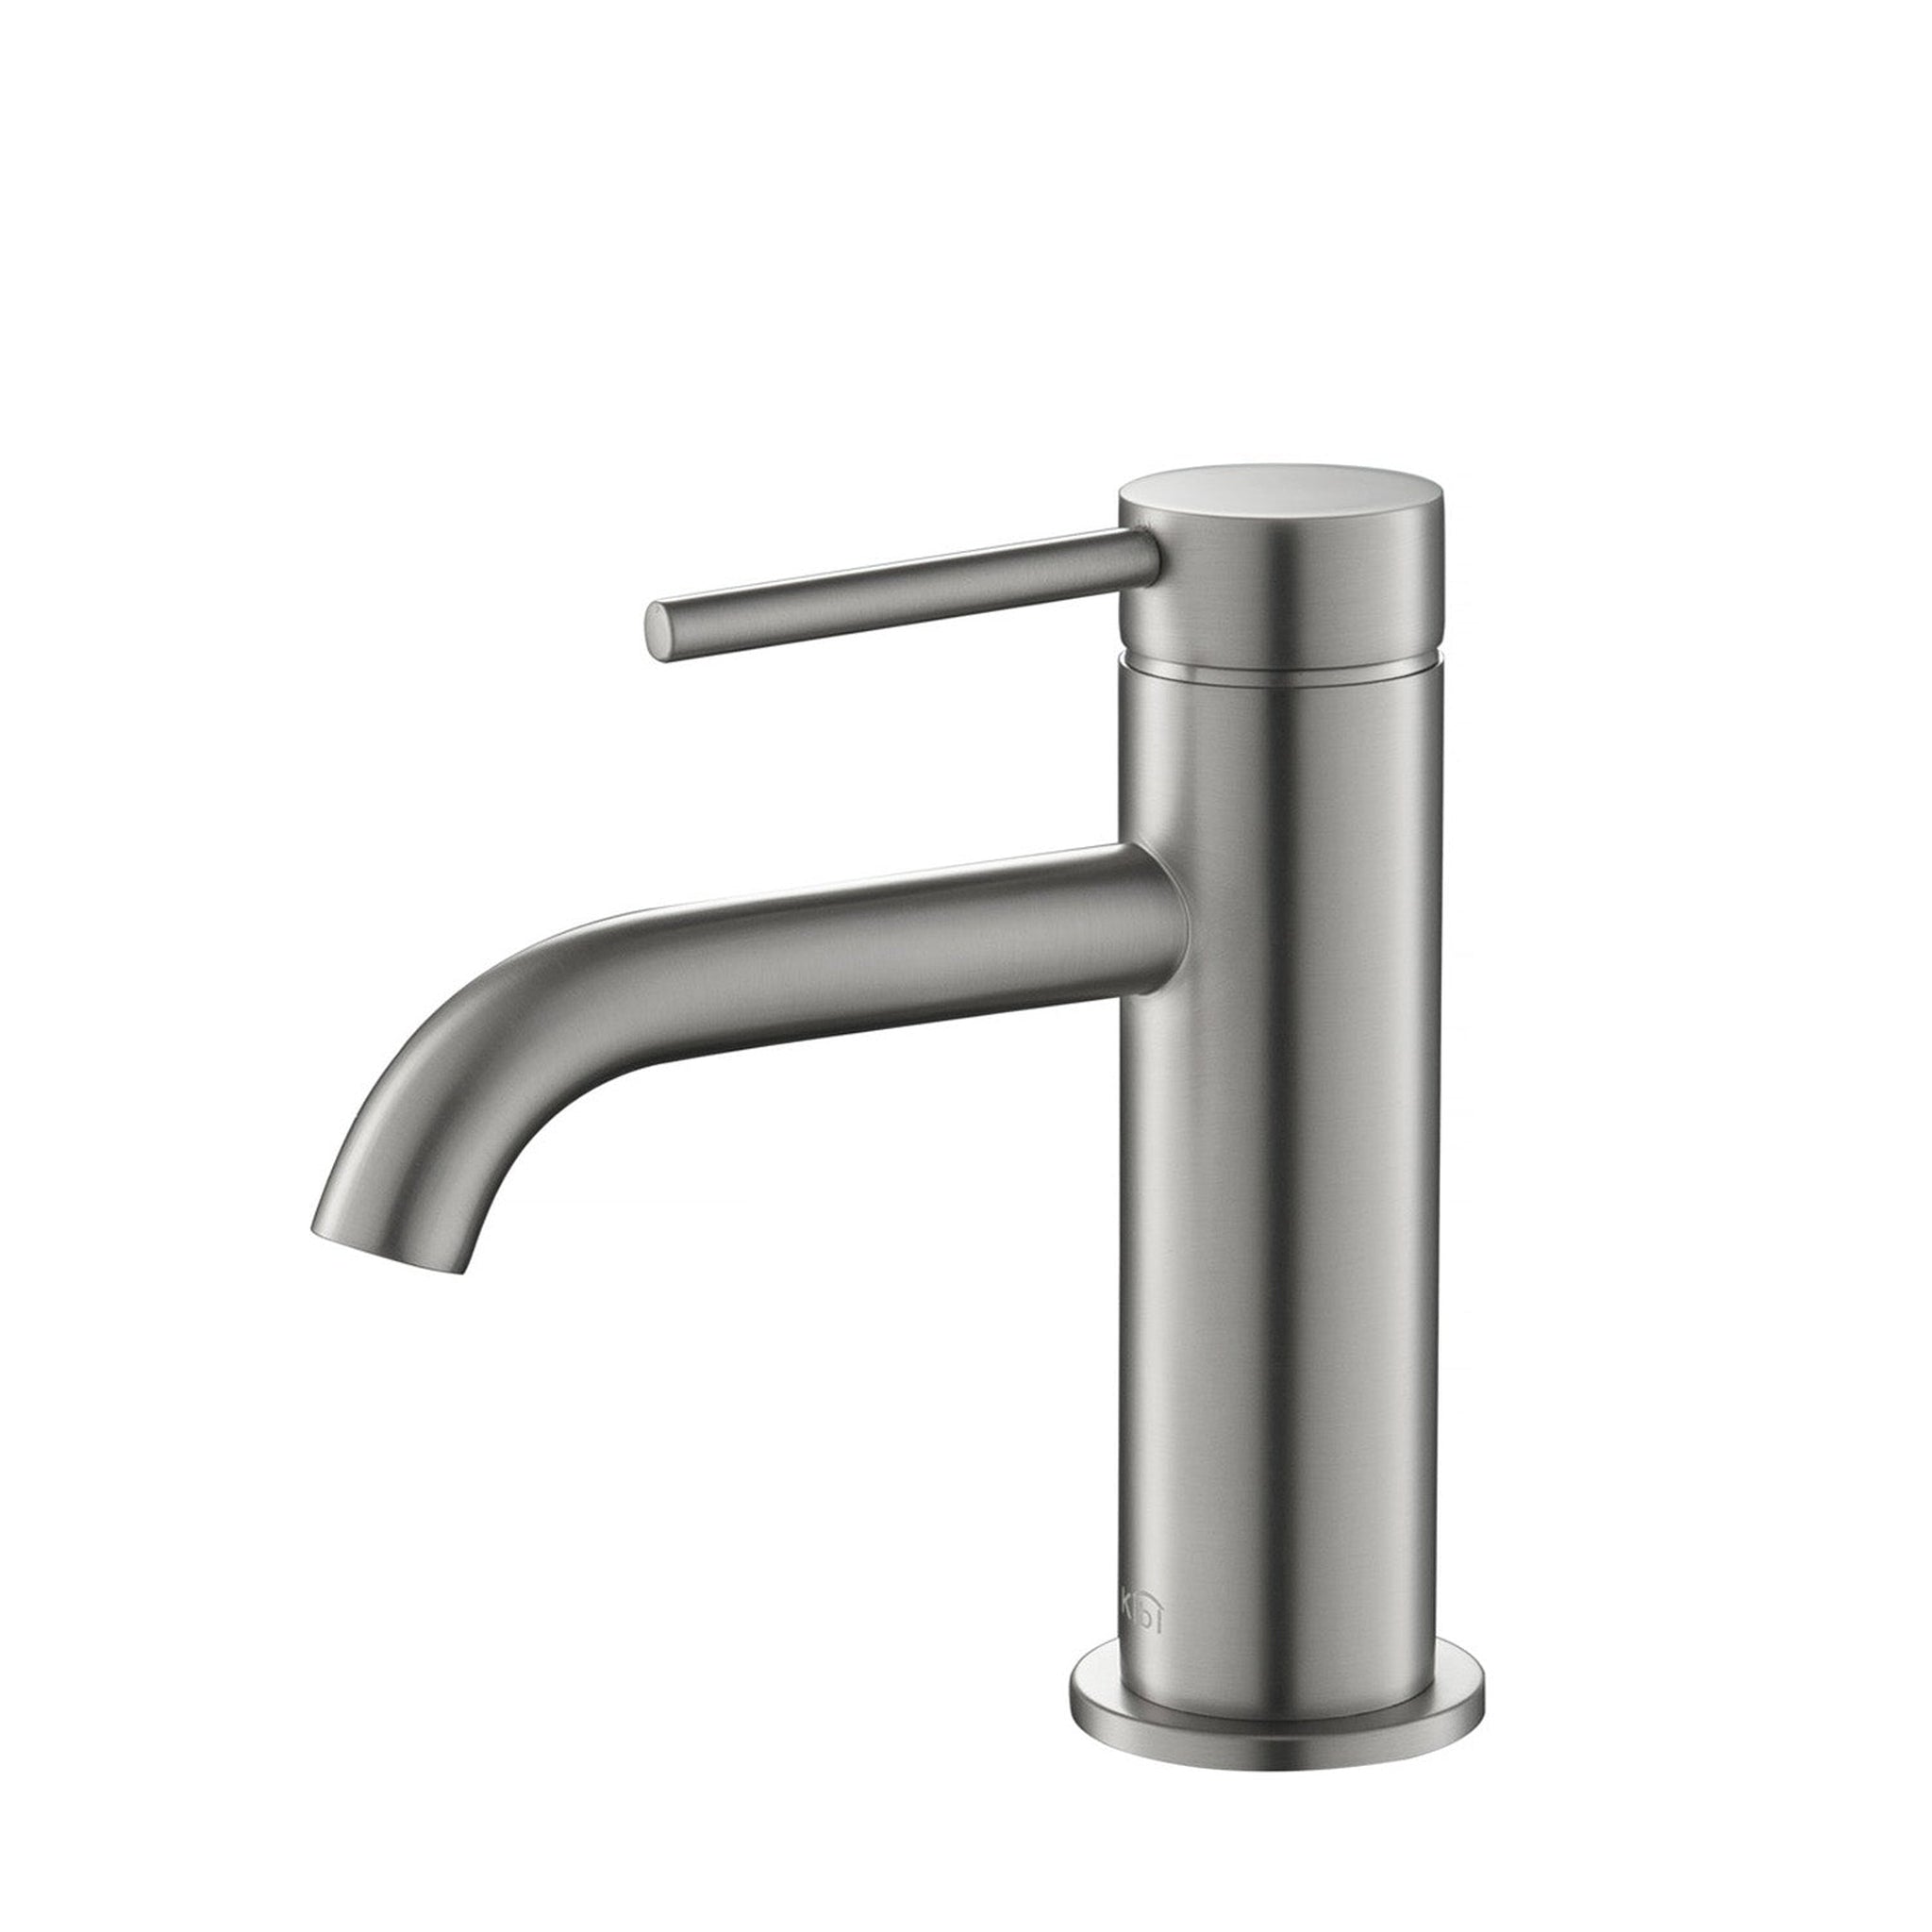 KIBI, KIBI Circular Single Handle Brushed Nickel Solid Brass Bathroom Sink Faucet